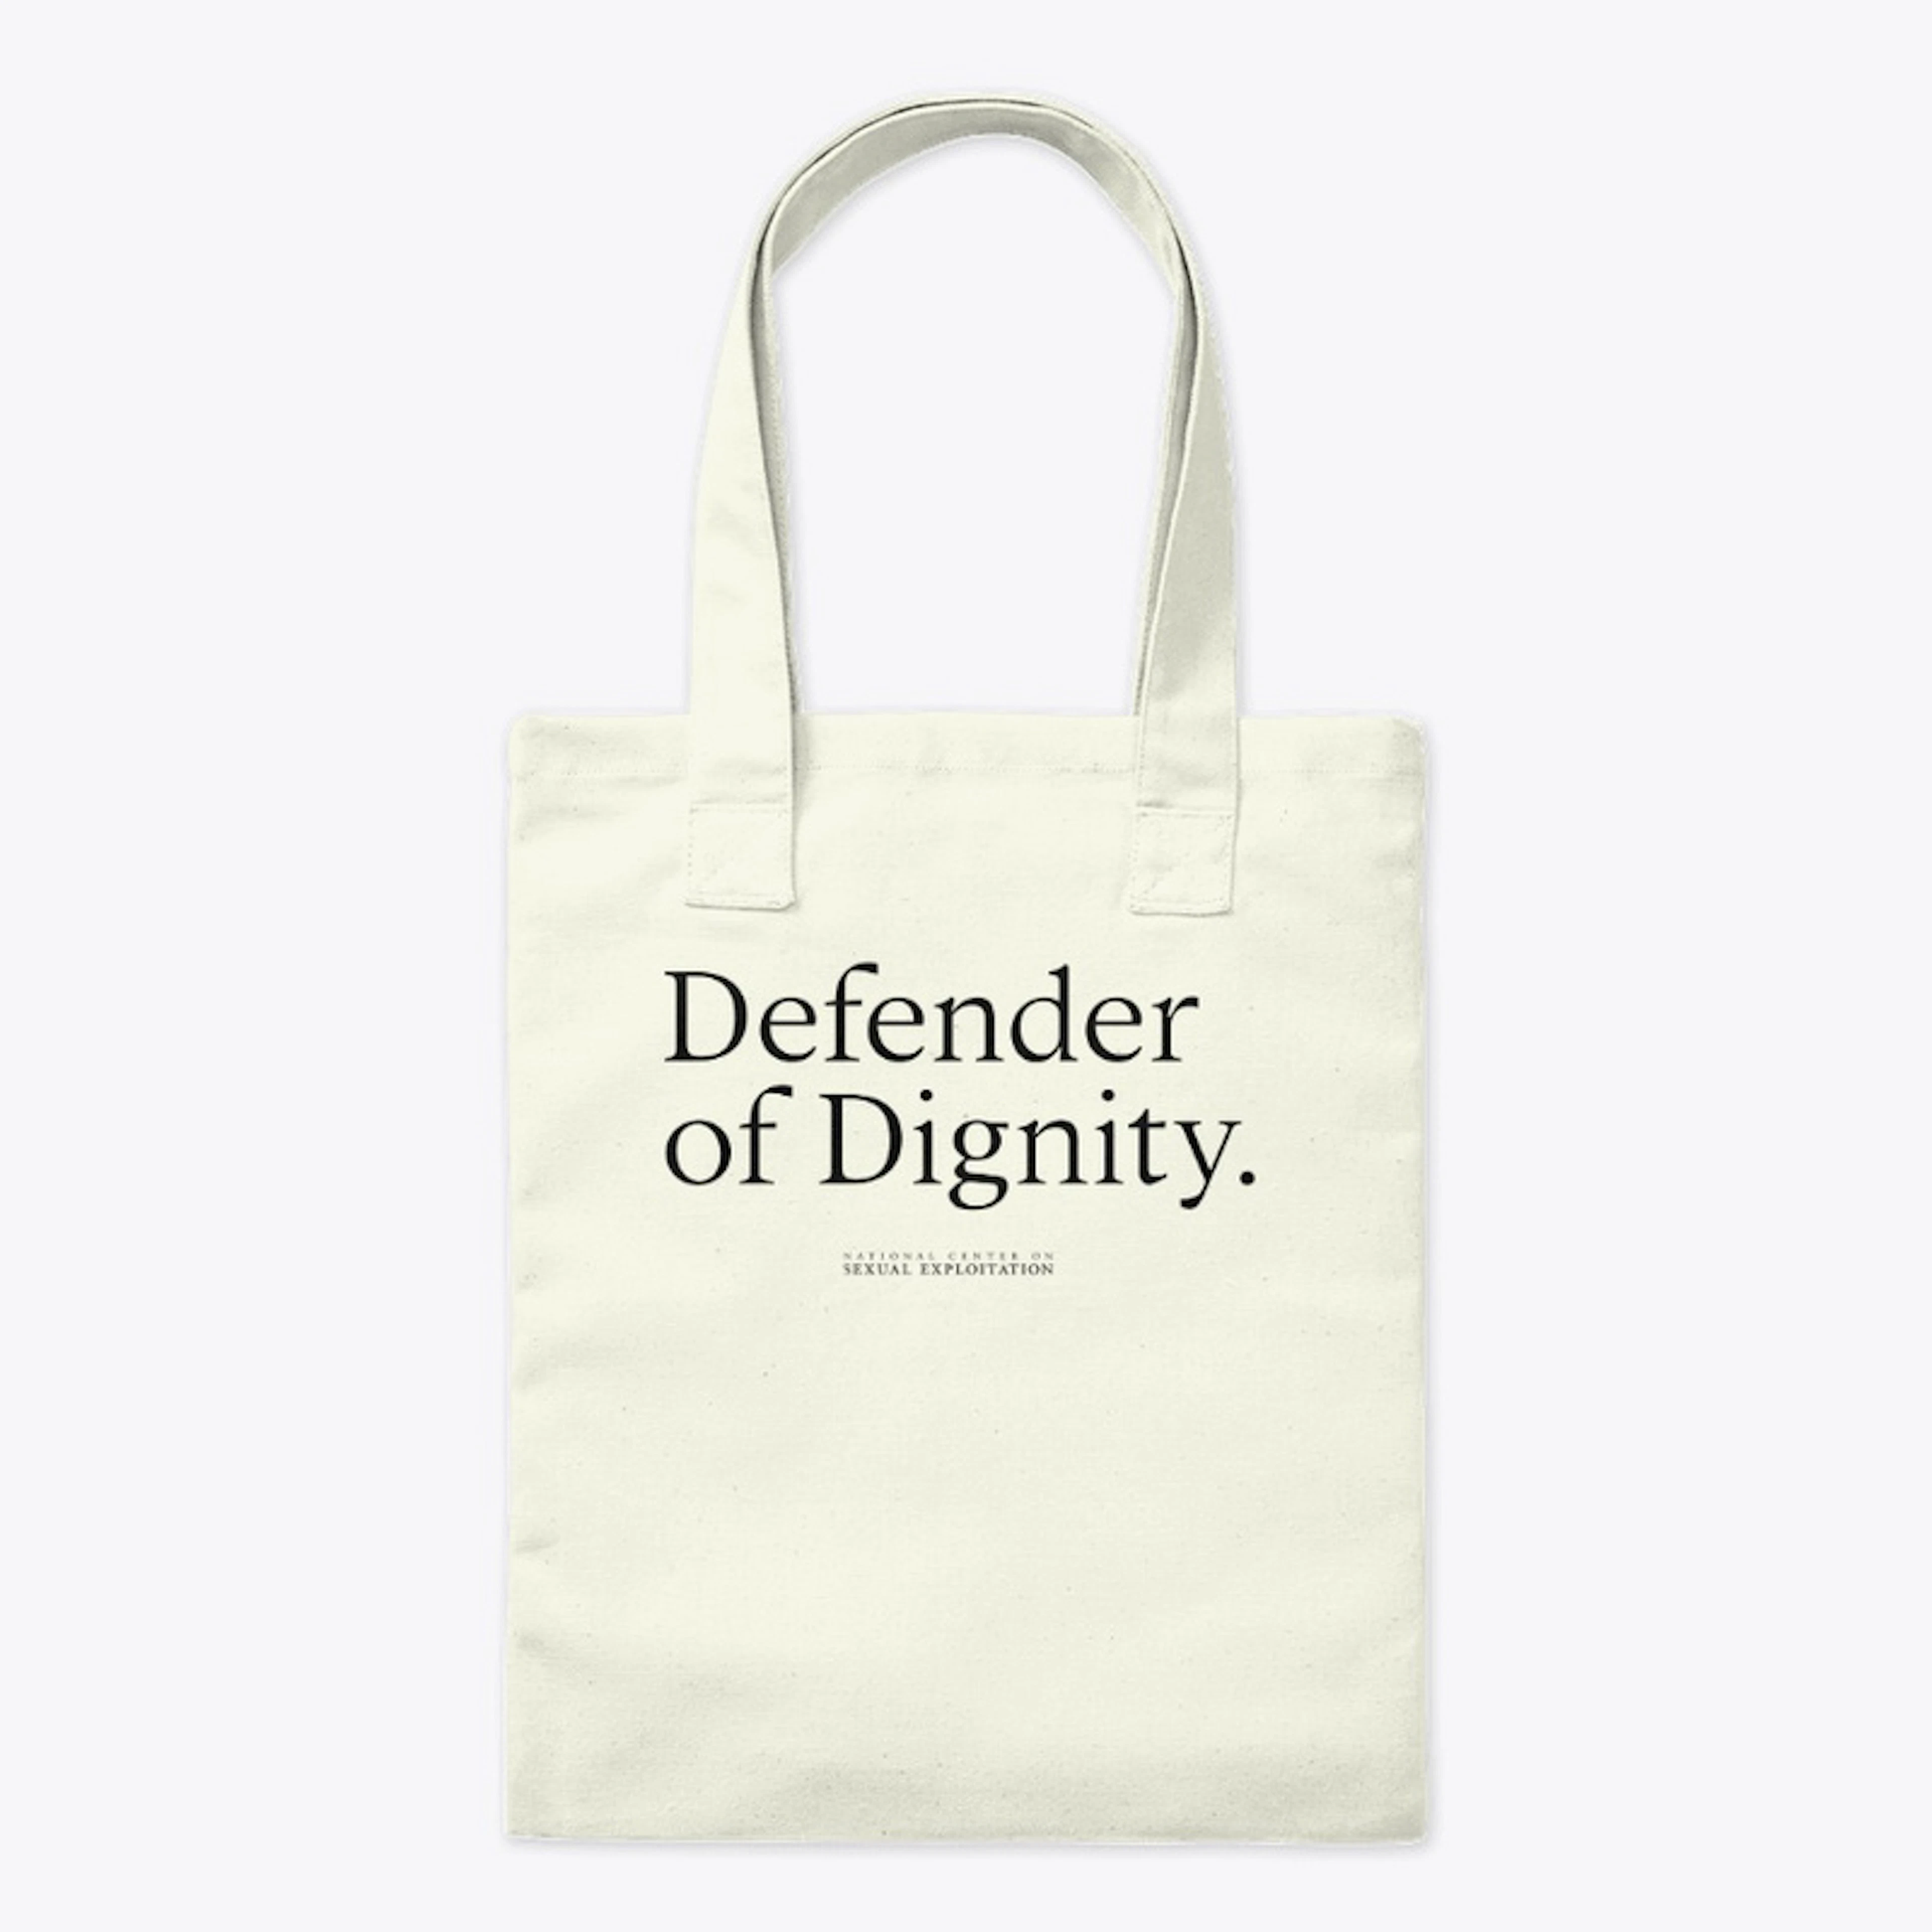 Dignity Defender - White/Black